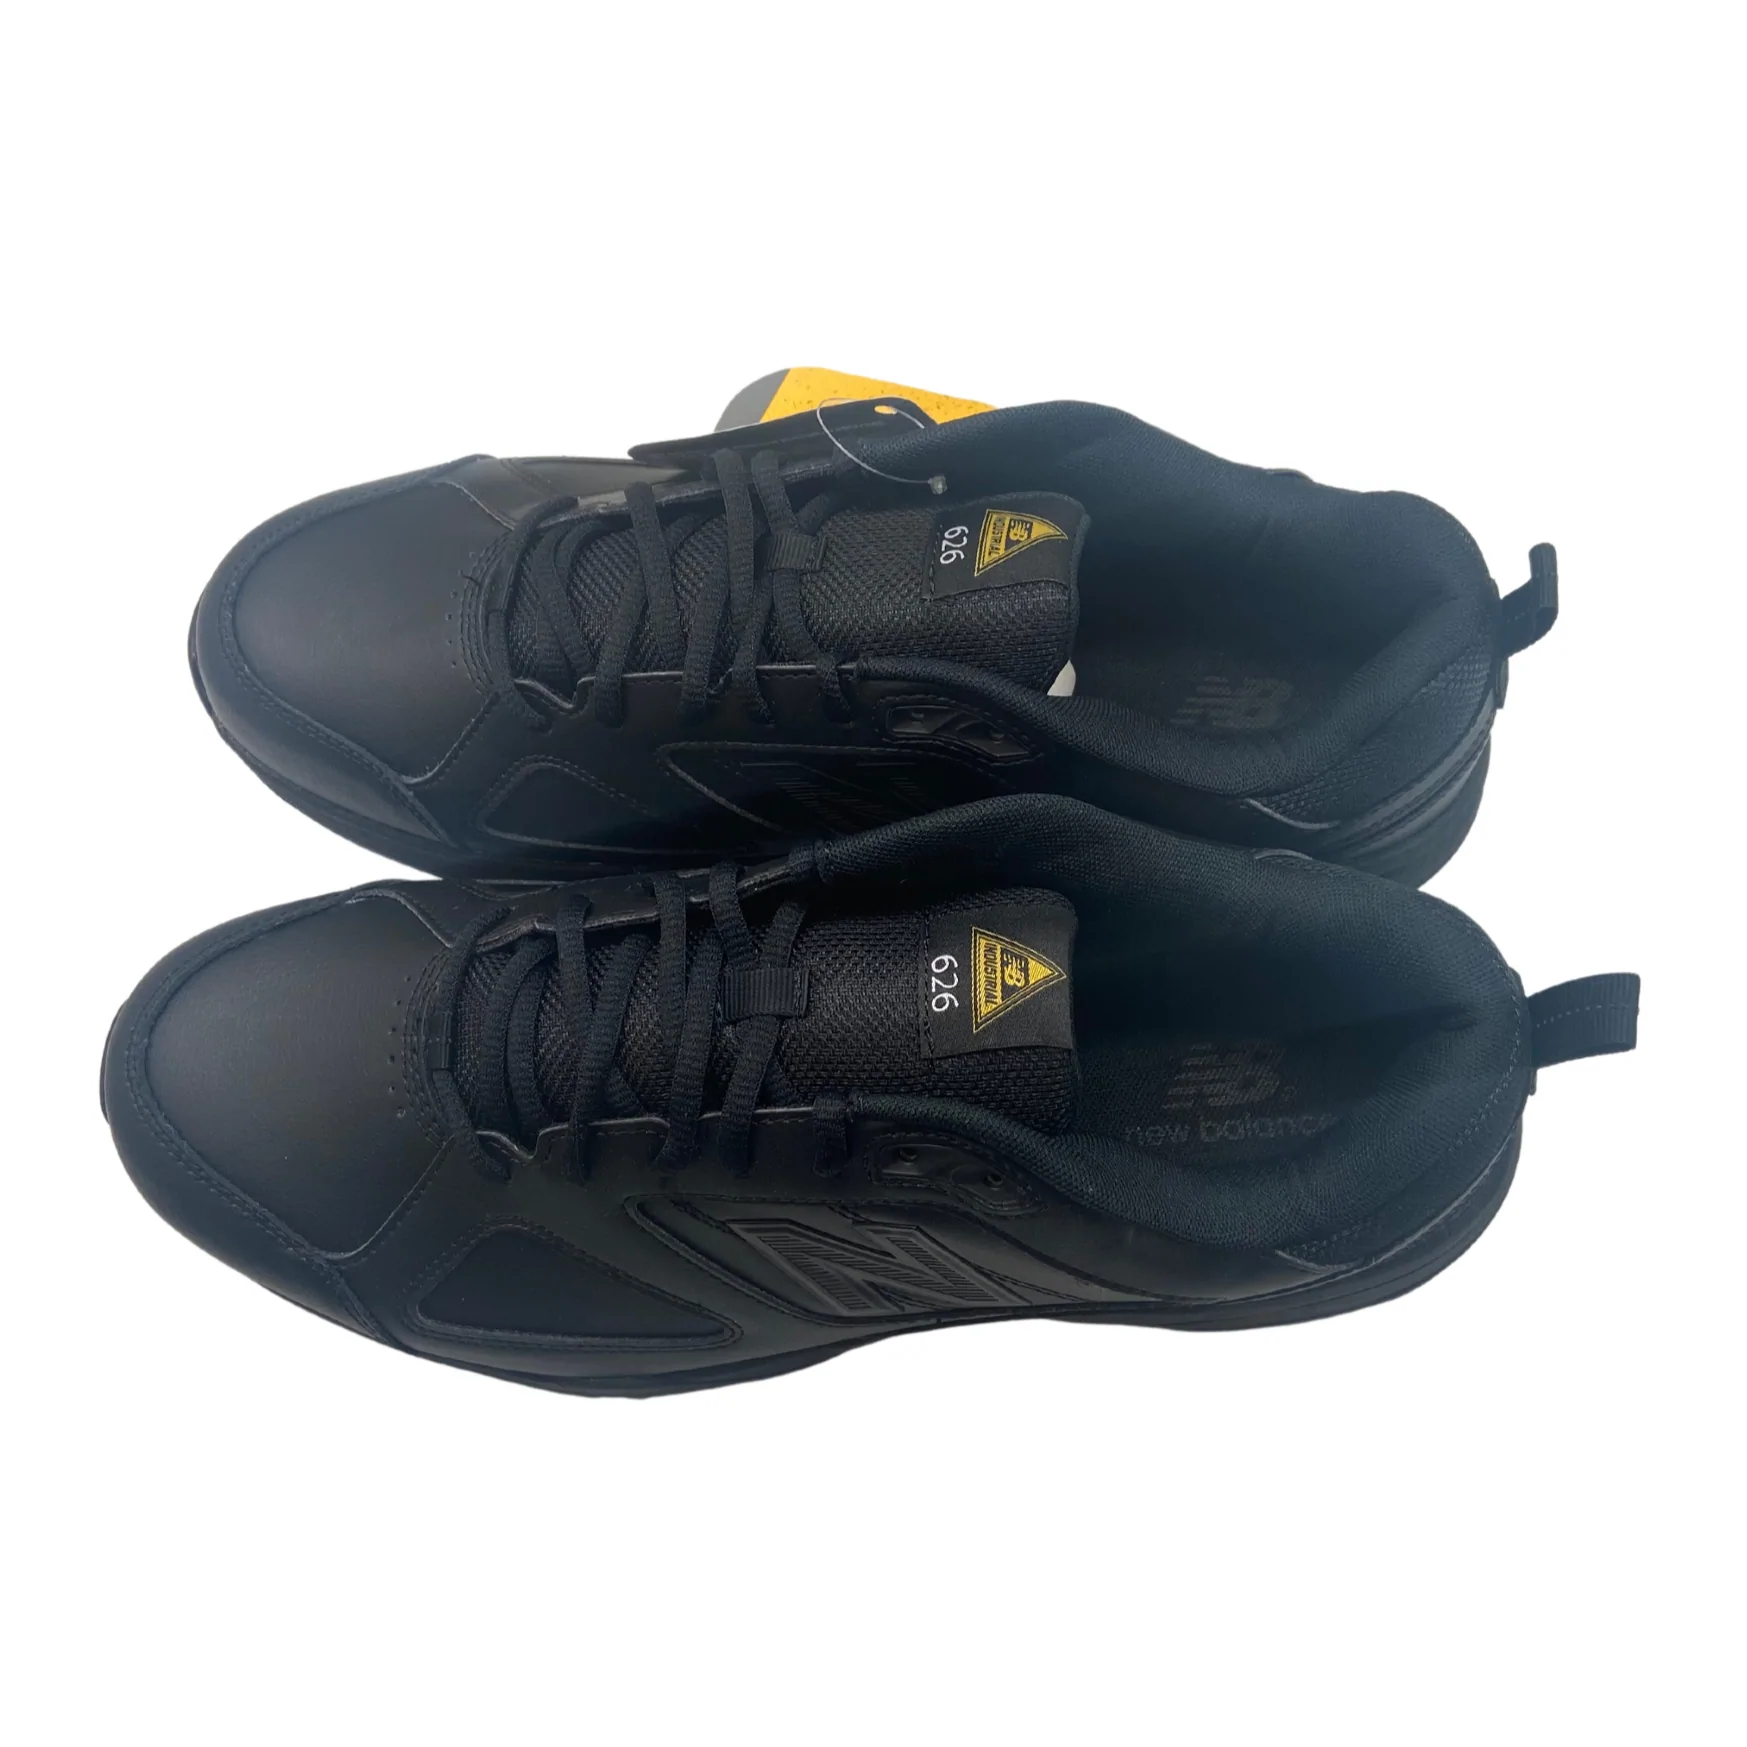 New Balance: Men's Shoes / Industrial / Black / Size 12.5